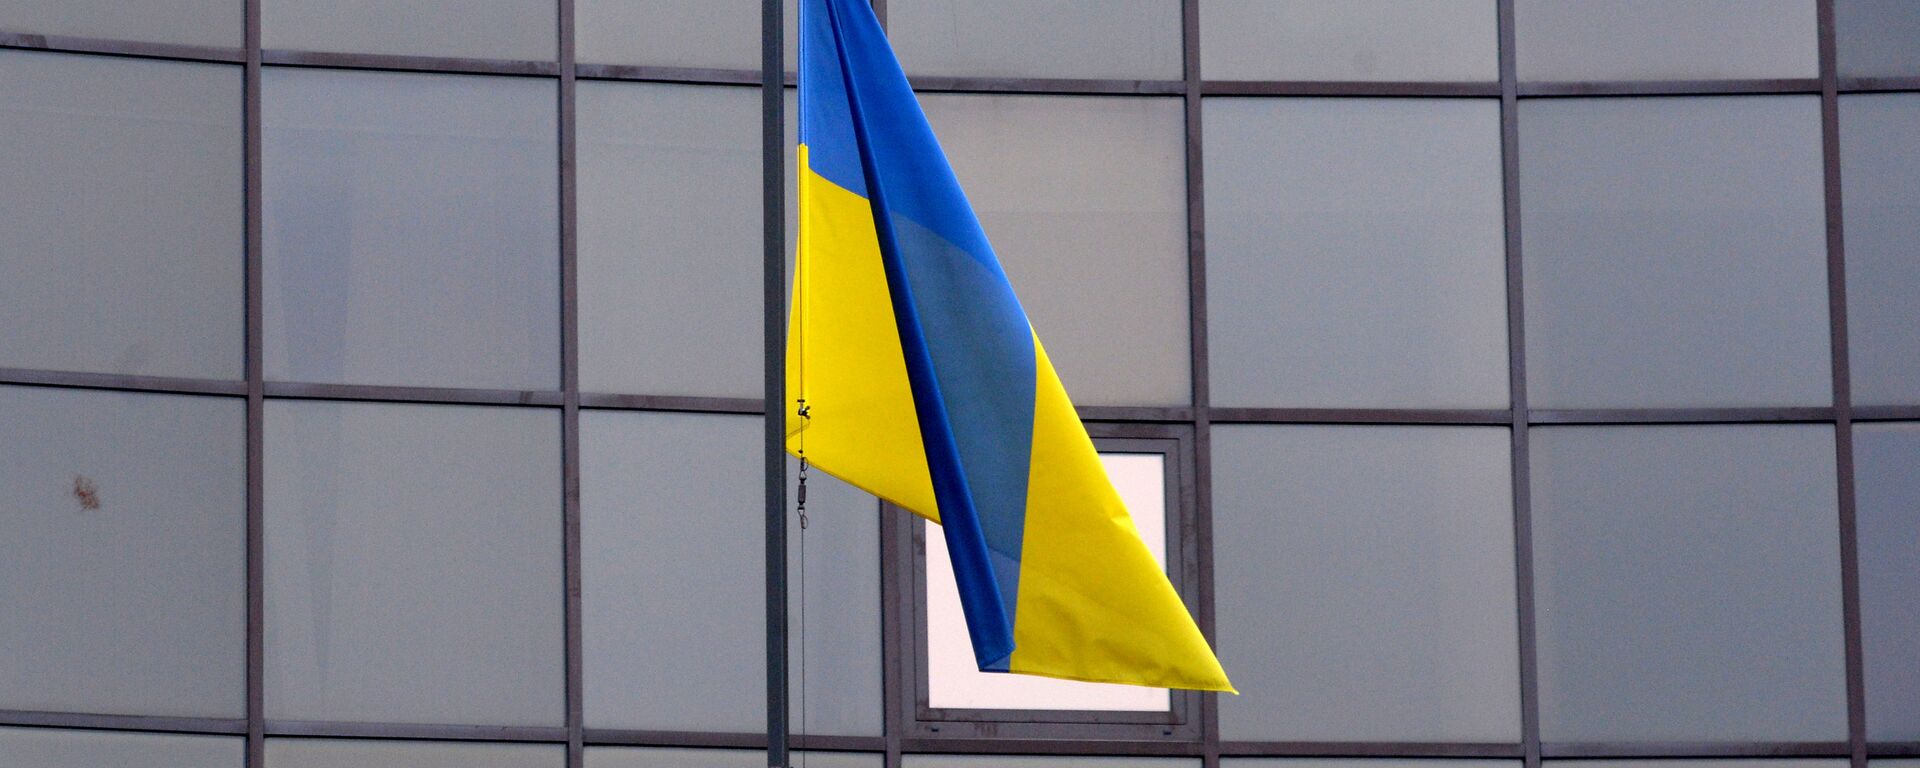 La bandera de Ucrania - Sputnik Mundo, 1920, 22.03.2021